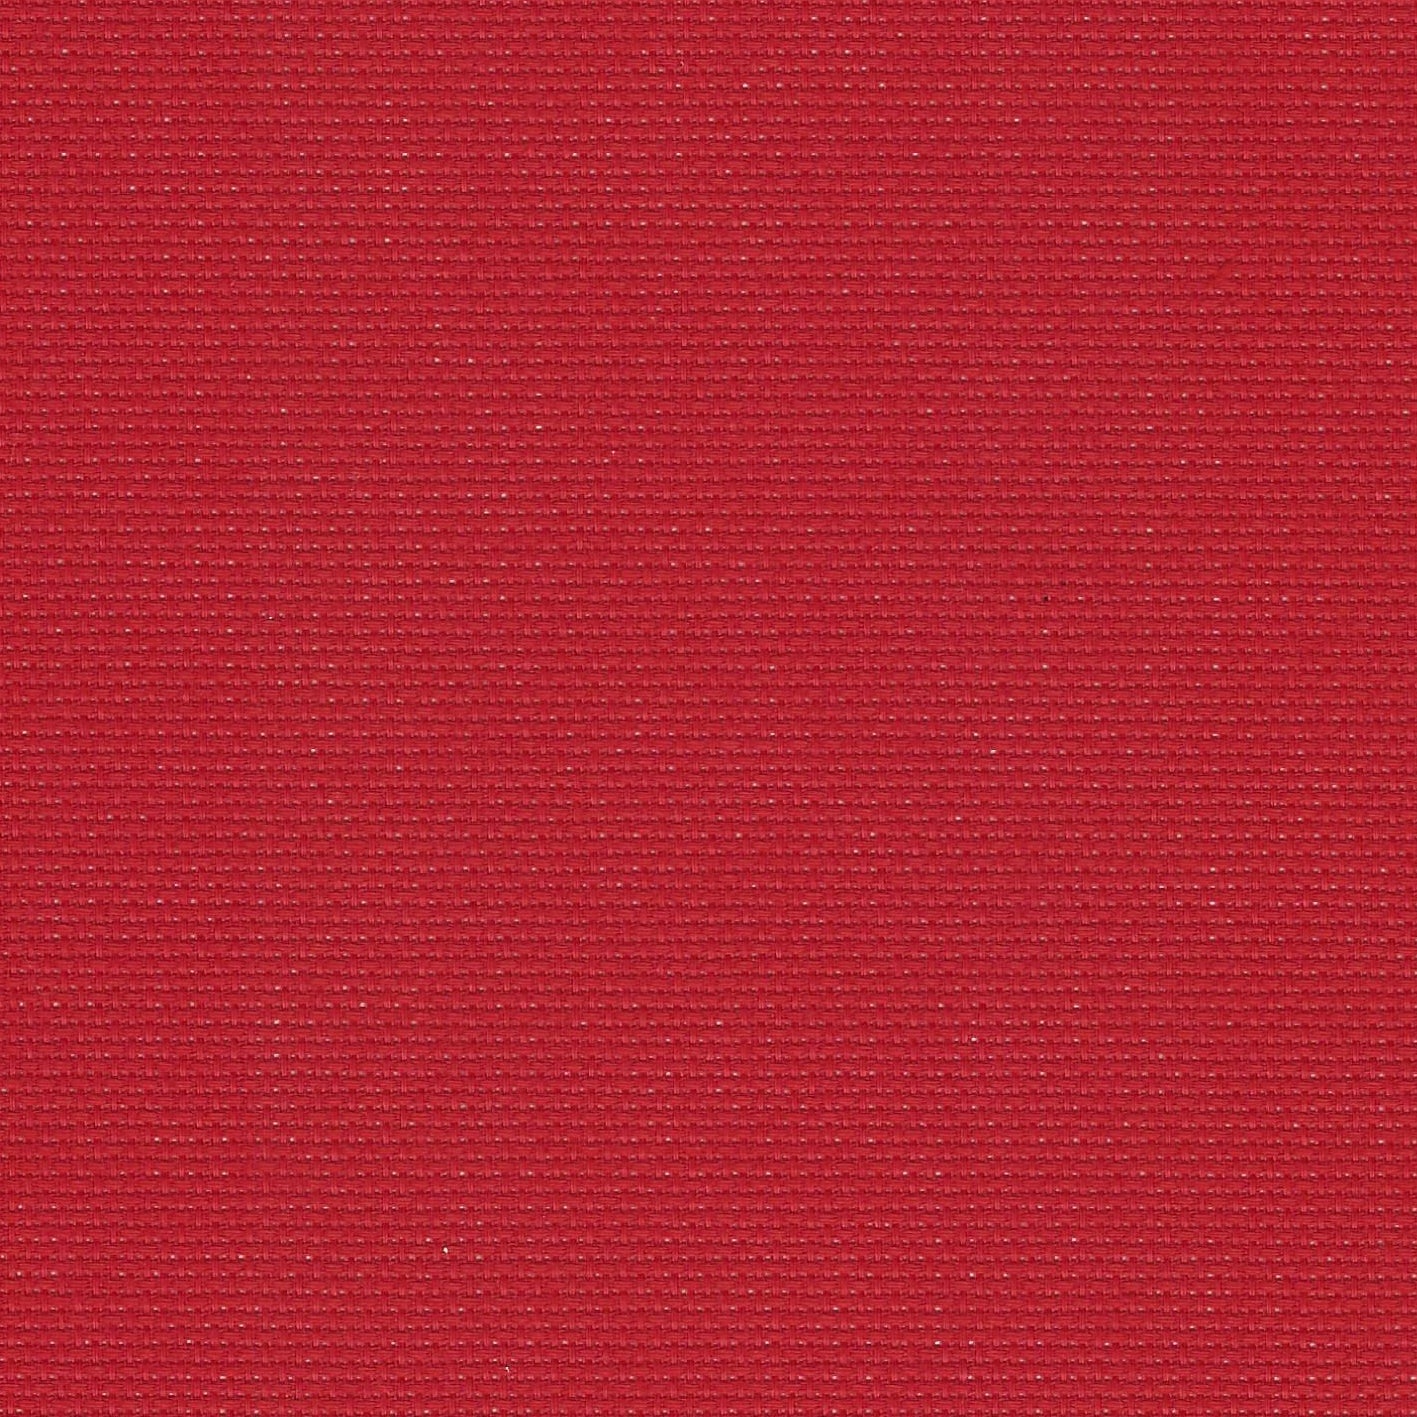 Fein-Aida 18 Count Zweigart Needlework Fabric, 3793/954